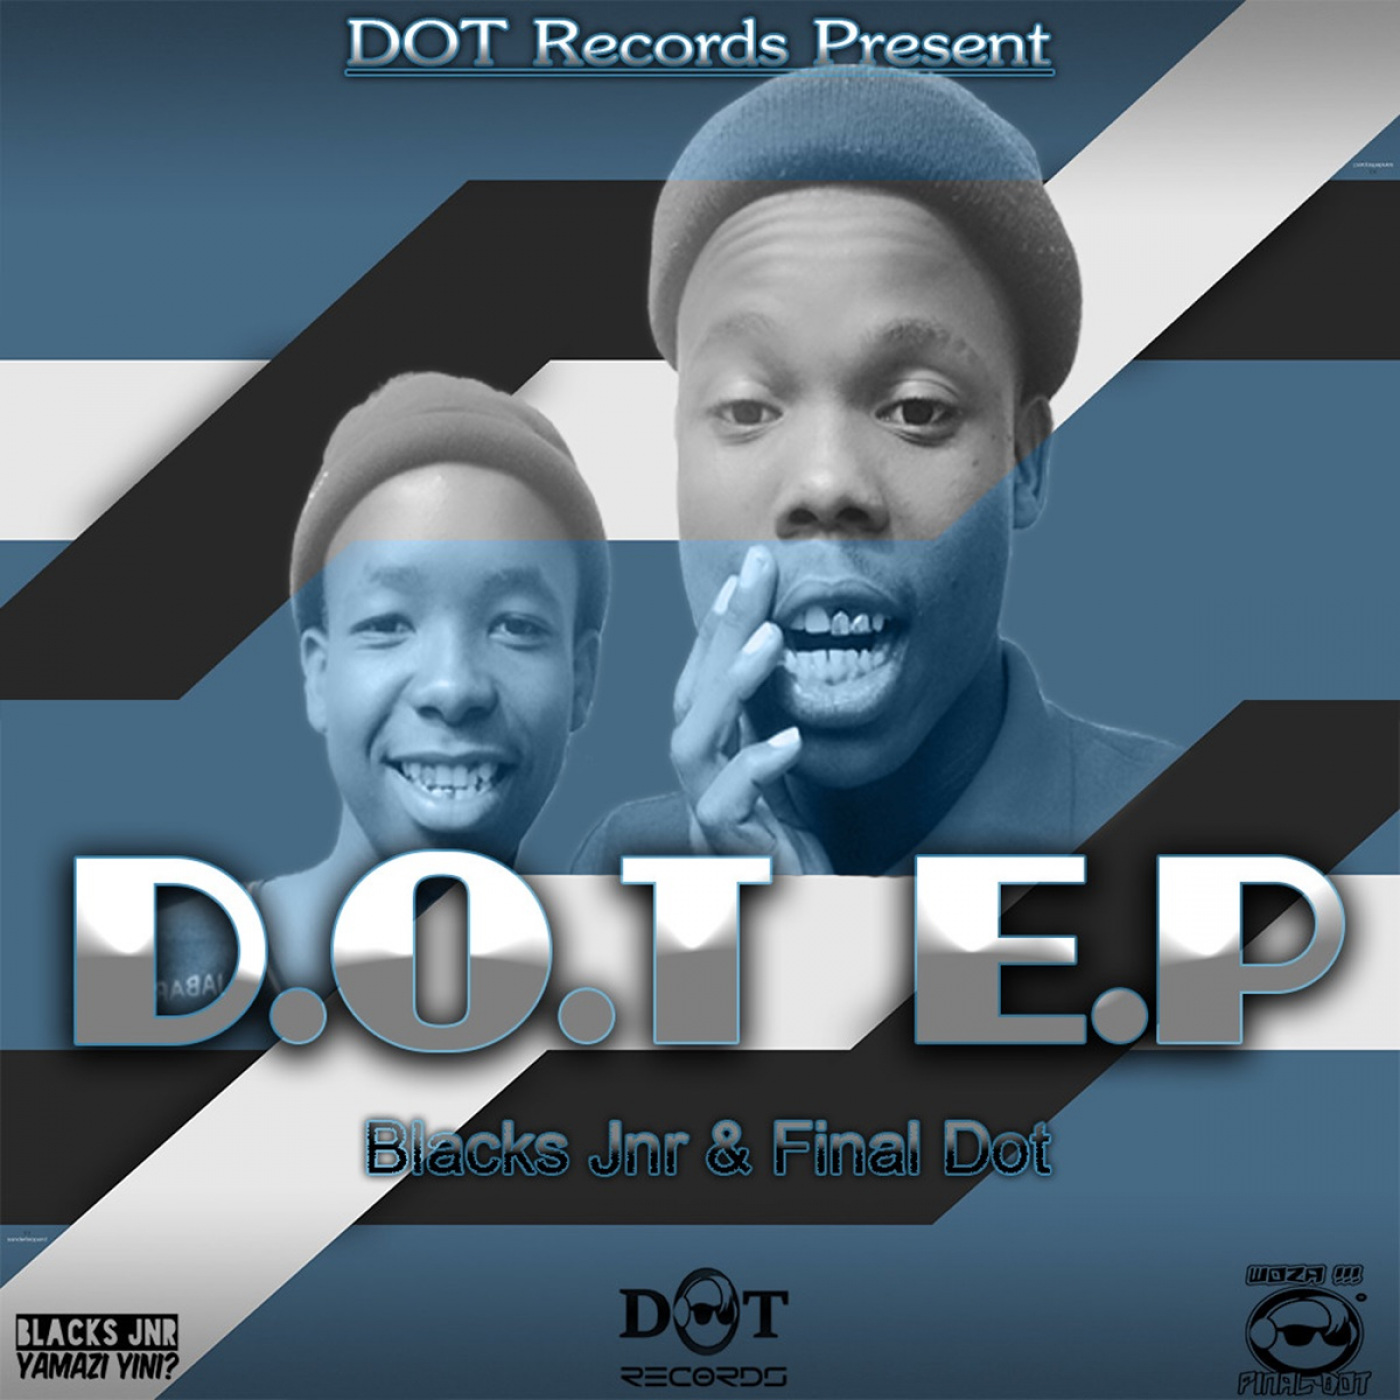 Black Jnr & Final Dot - D.O.T EP / OneBeat Production